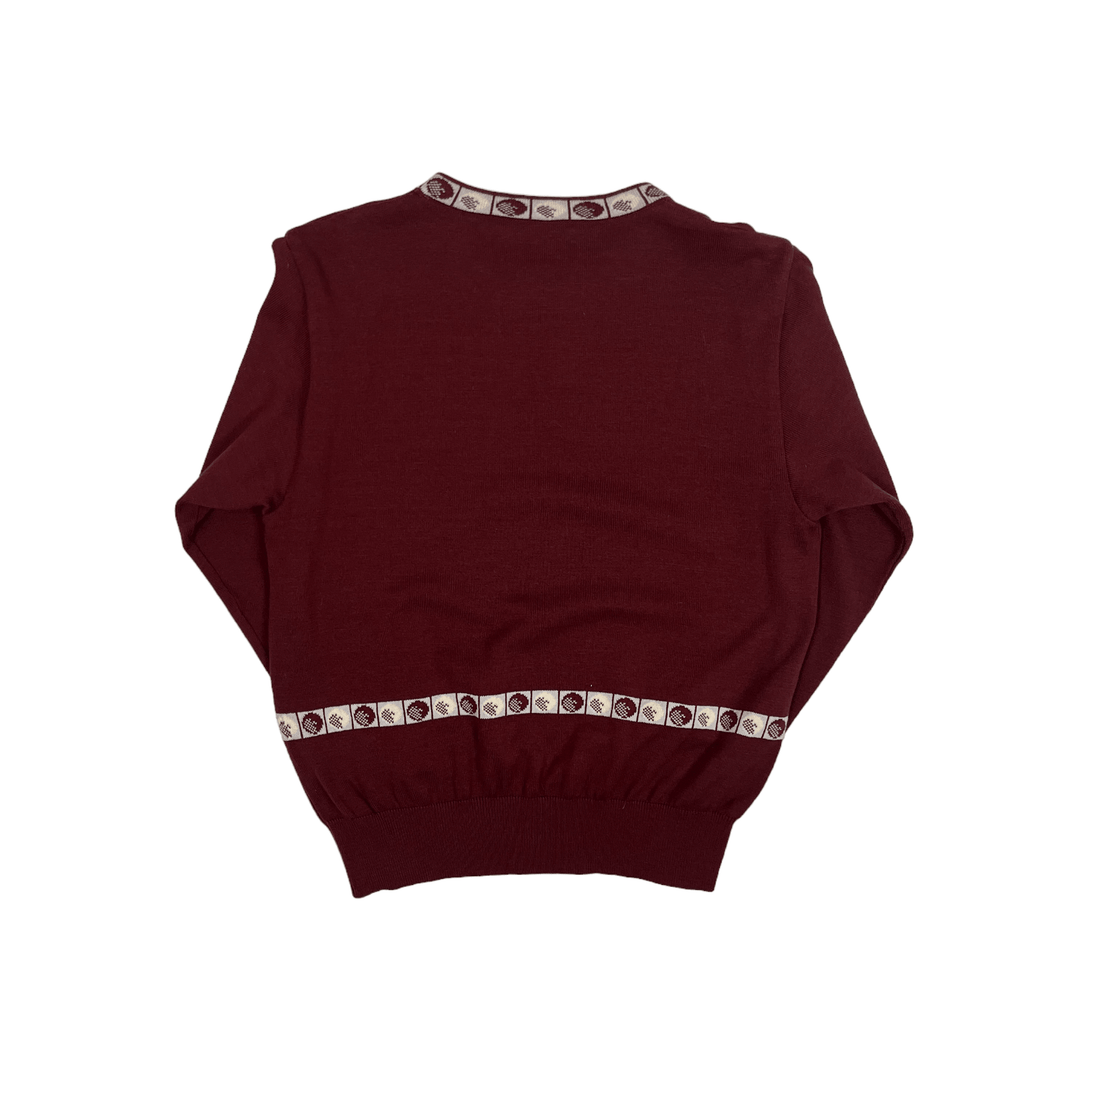 Vintage 90s Burgundy Christian Dior Sports Sweatshirt - Medium - The Streetwear Studio